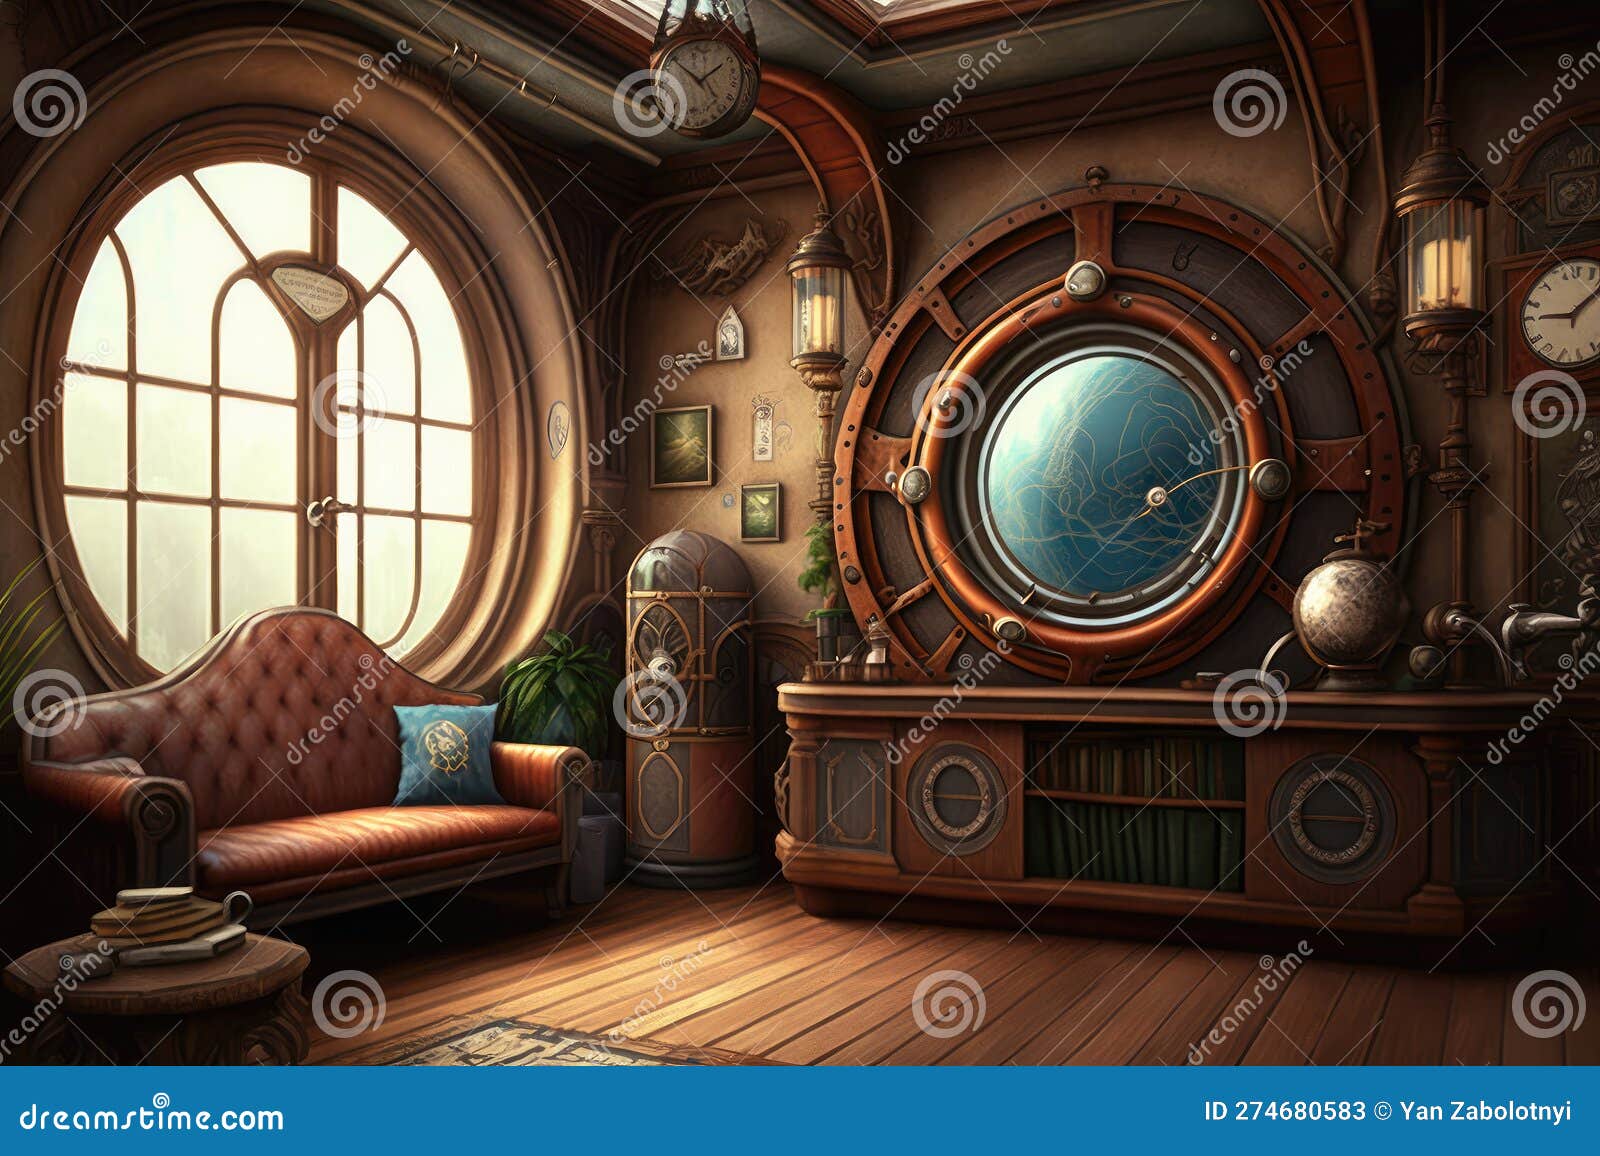 steampunk ship interior